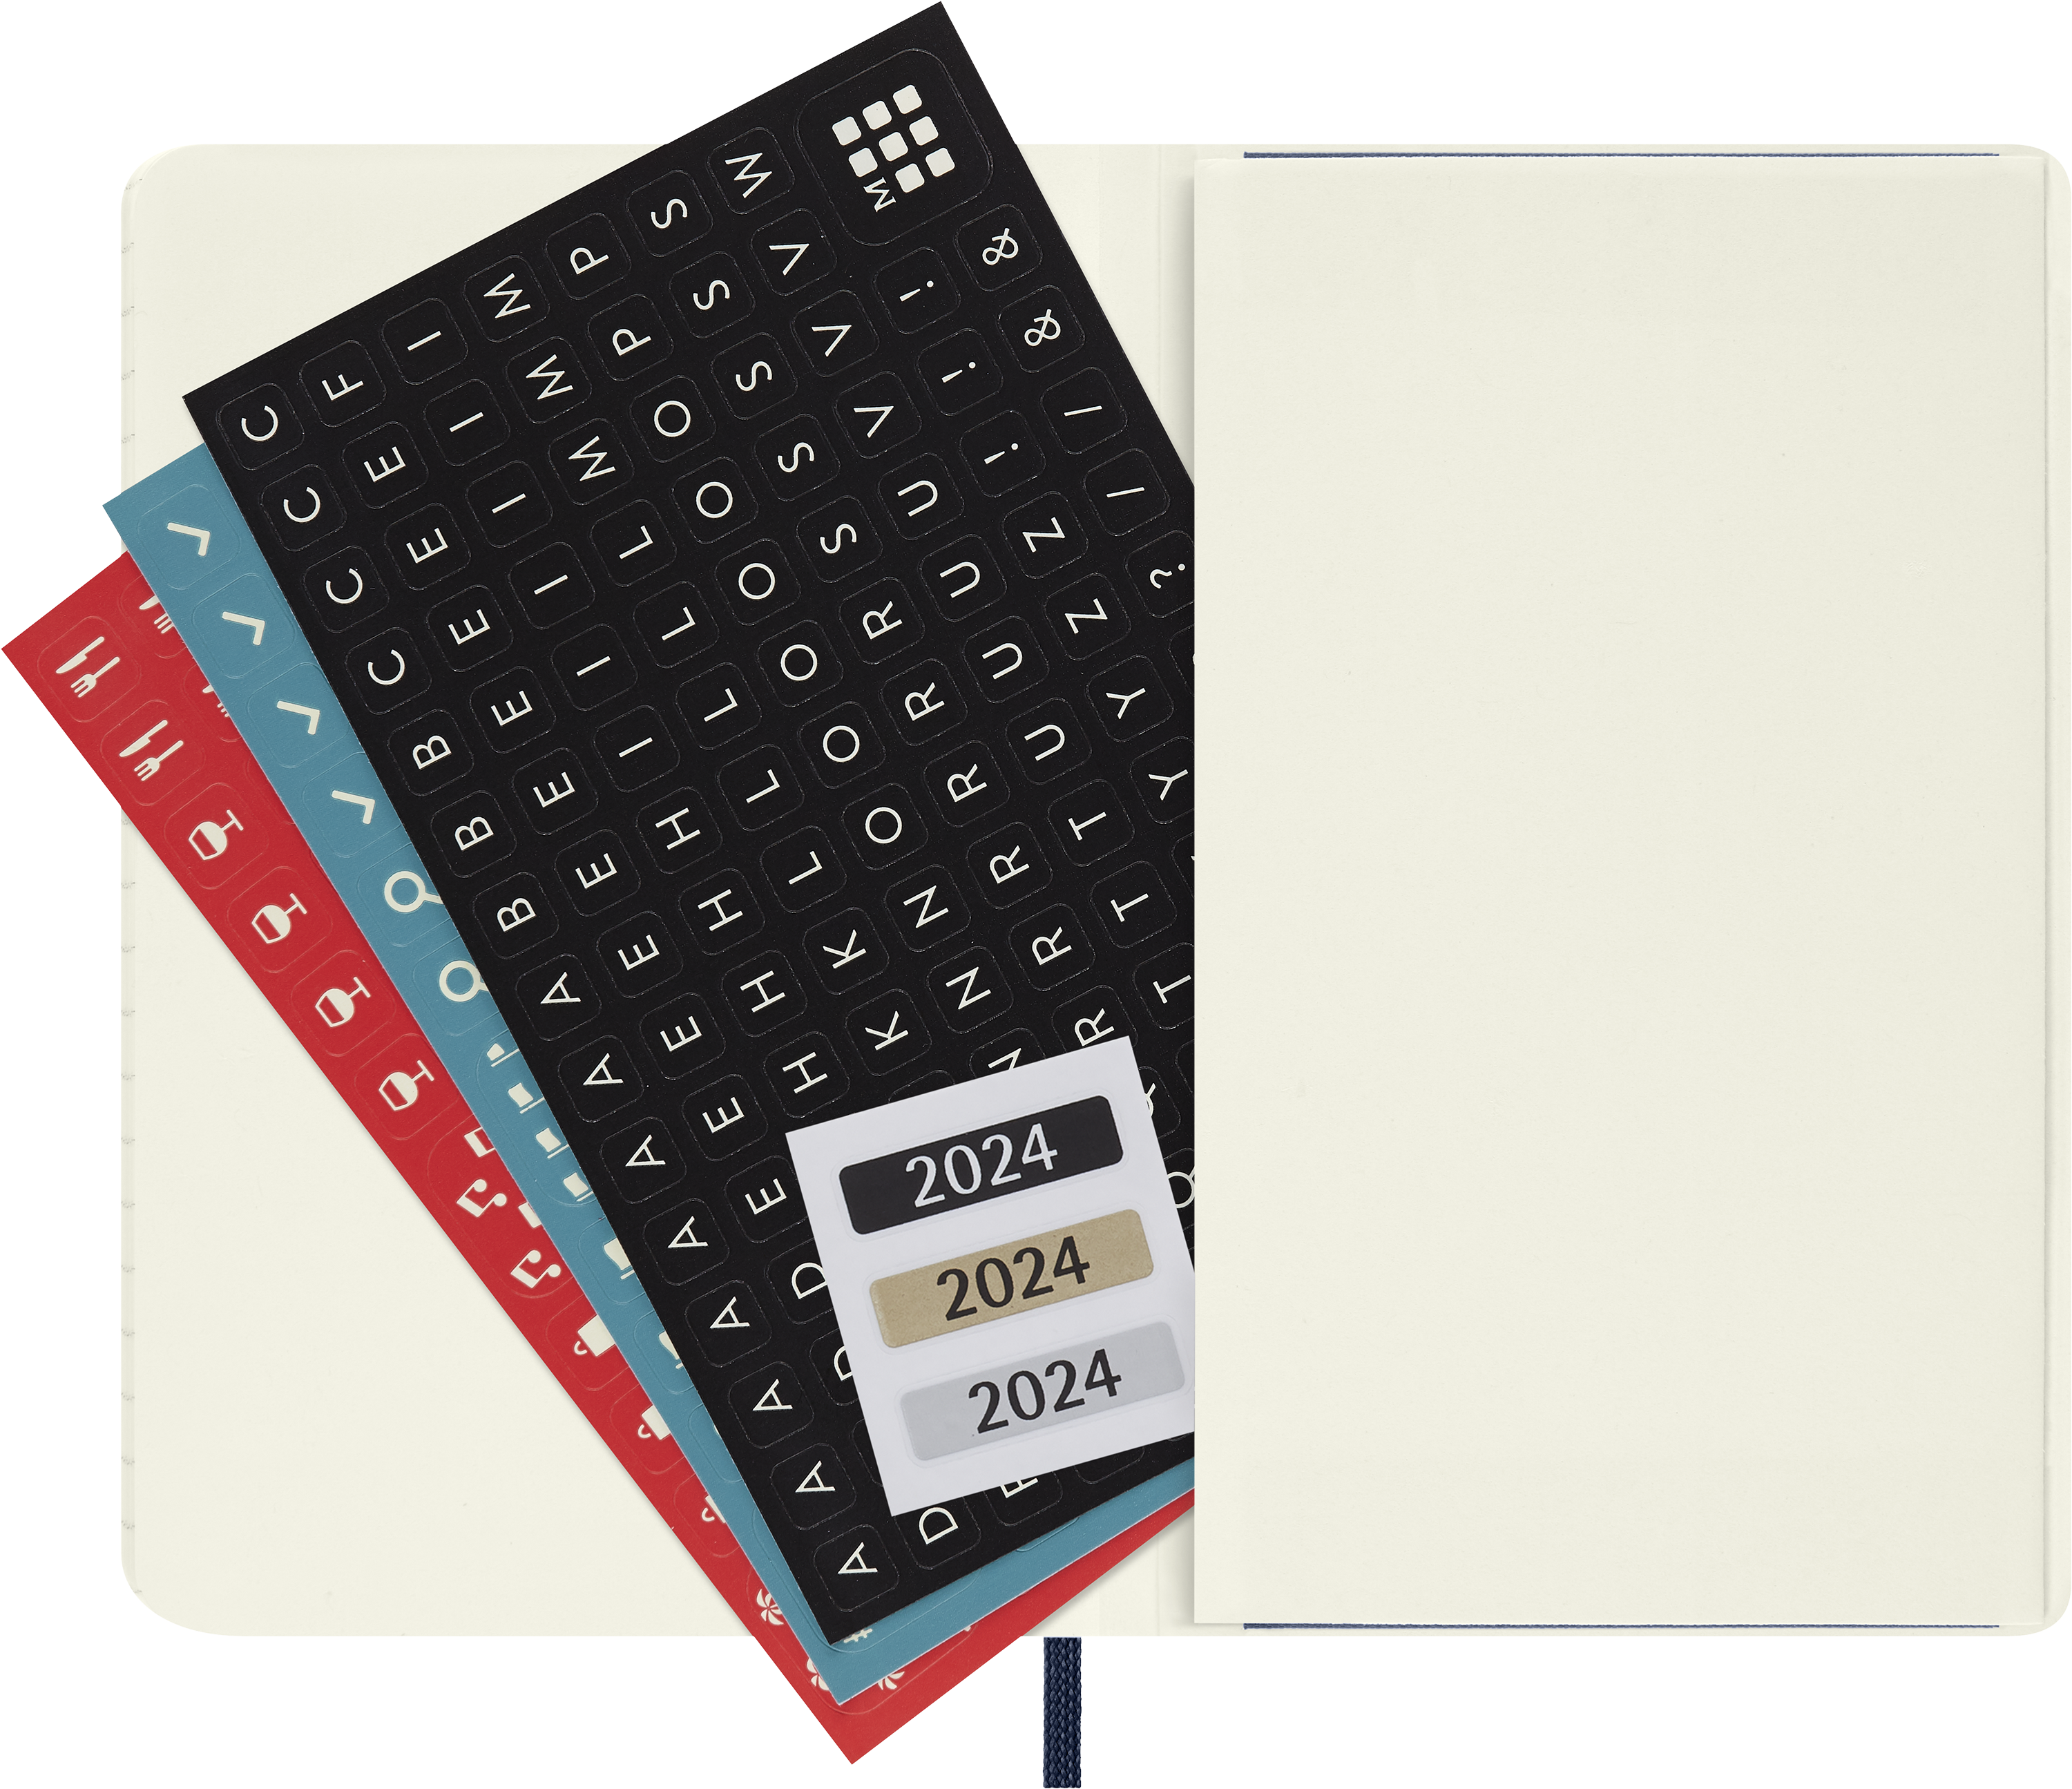 Moleskine 2024 diary softcover pocket day